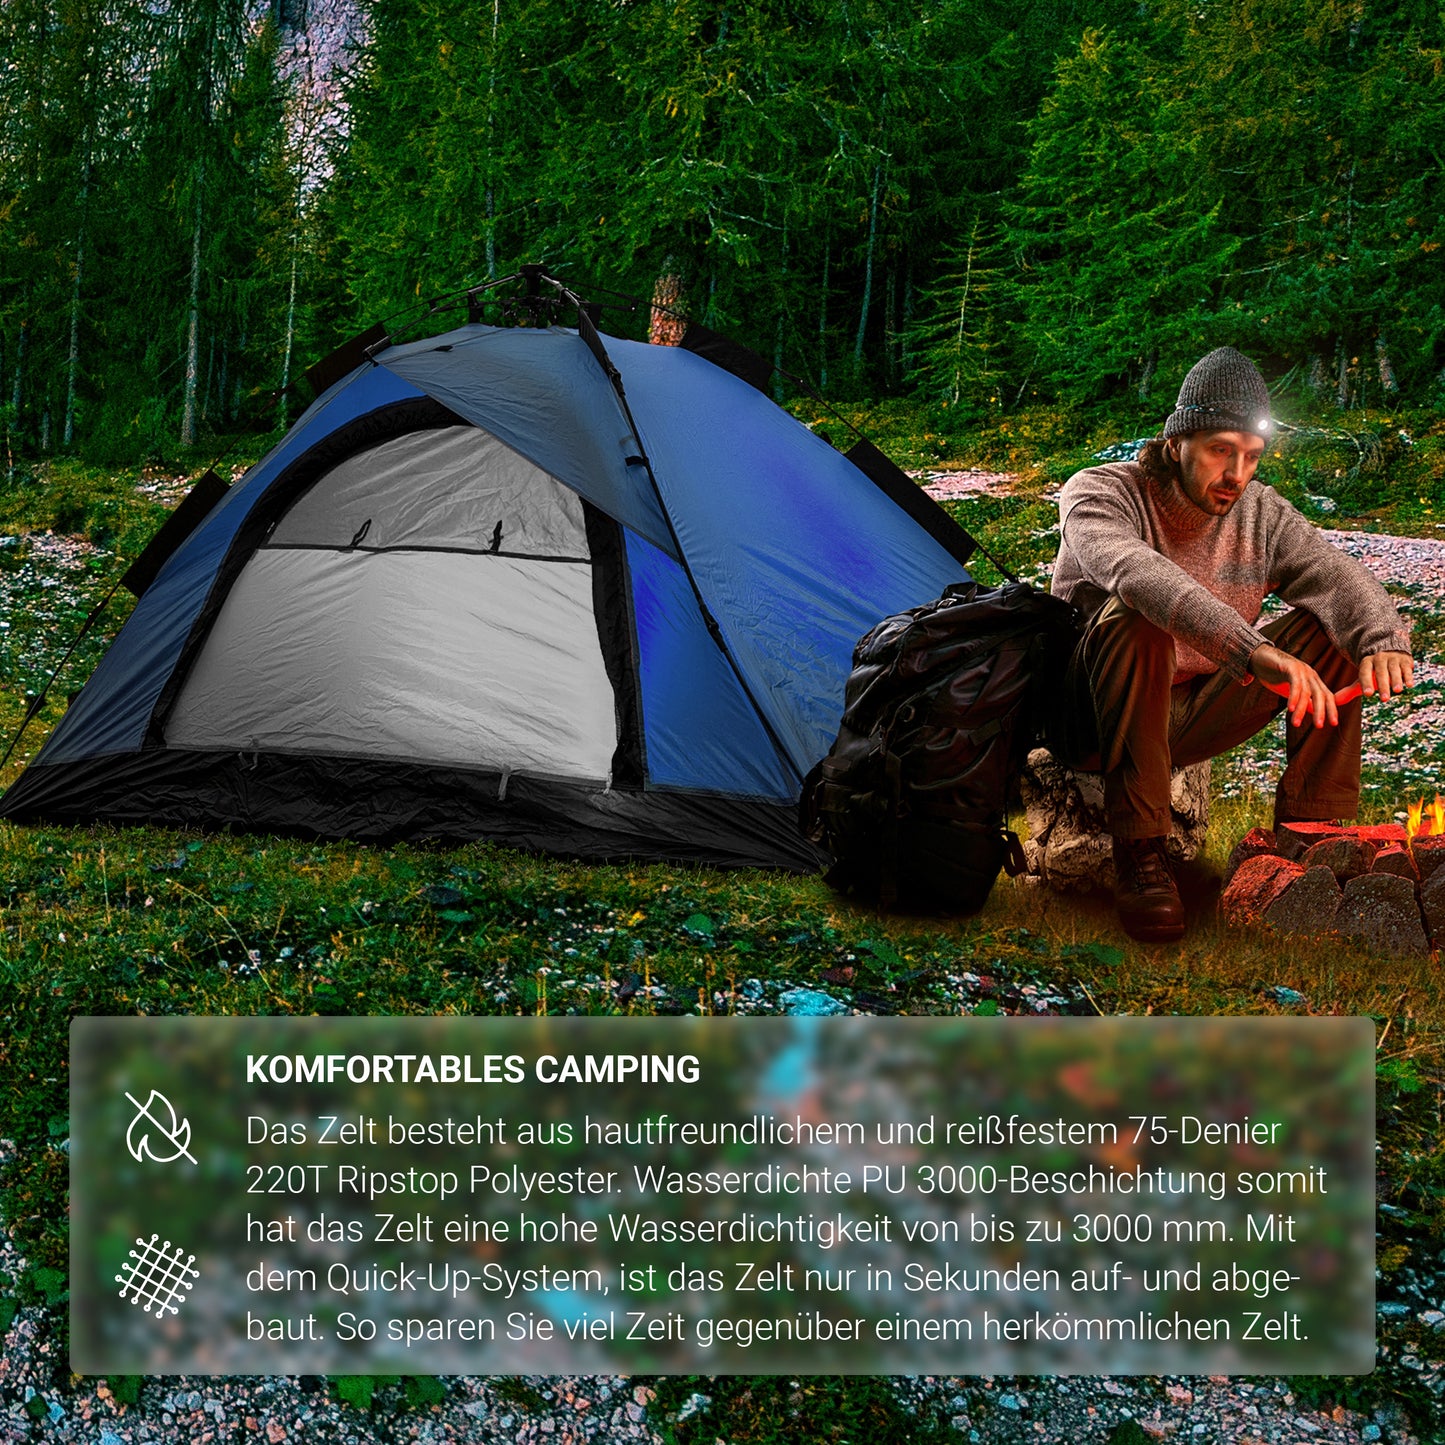 Camping Wurfzelt Premium